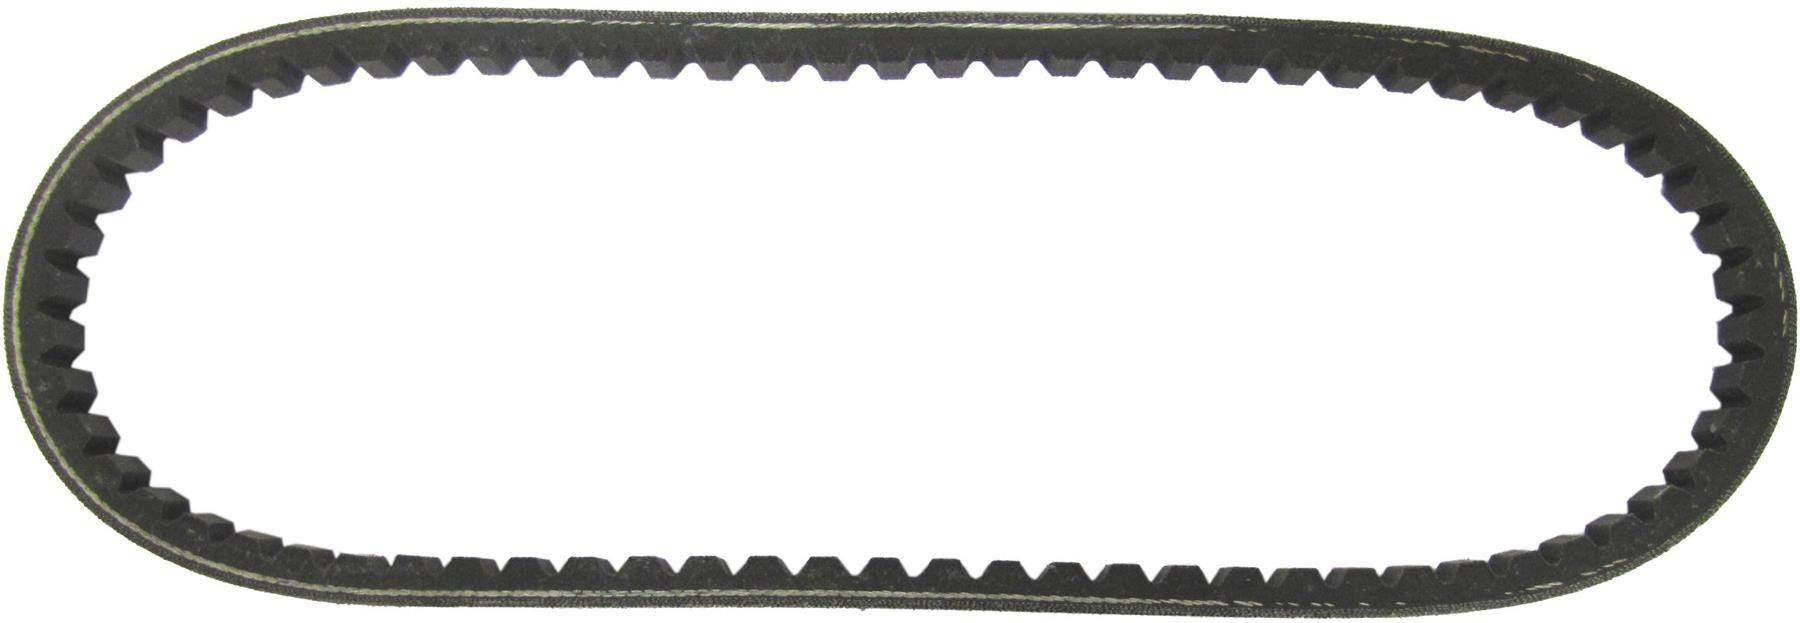 P.G.O Galaxy 50 1993-1967 Drive Belt